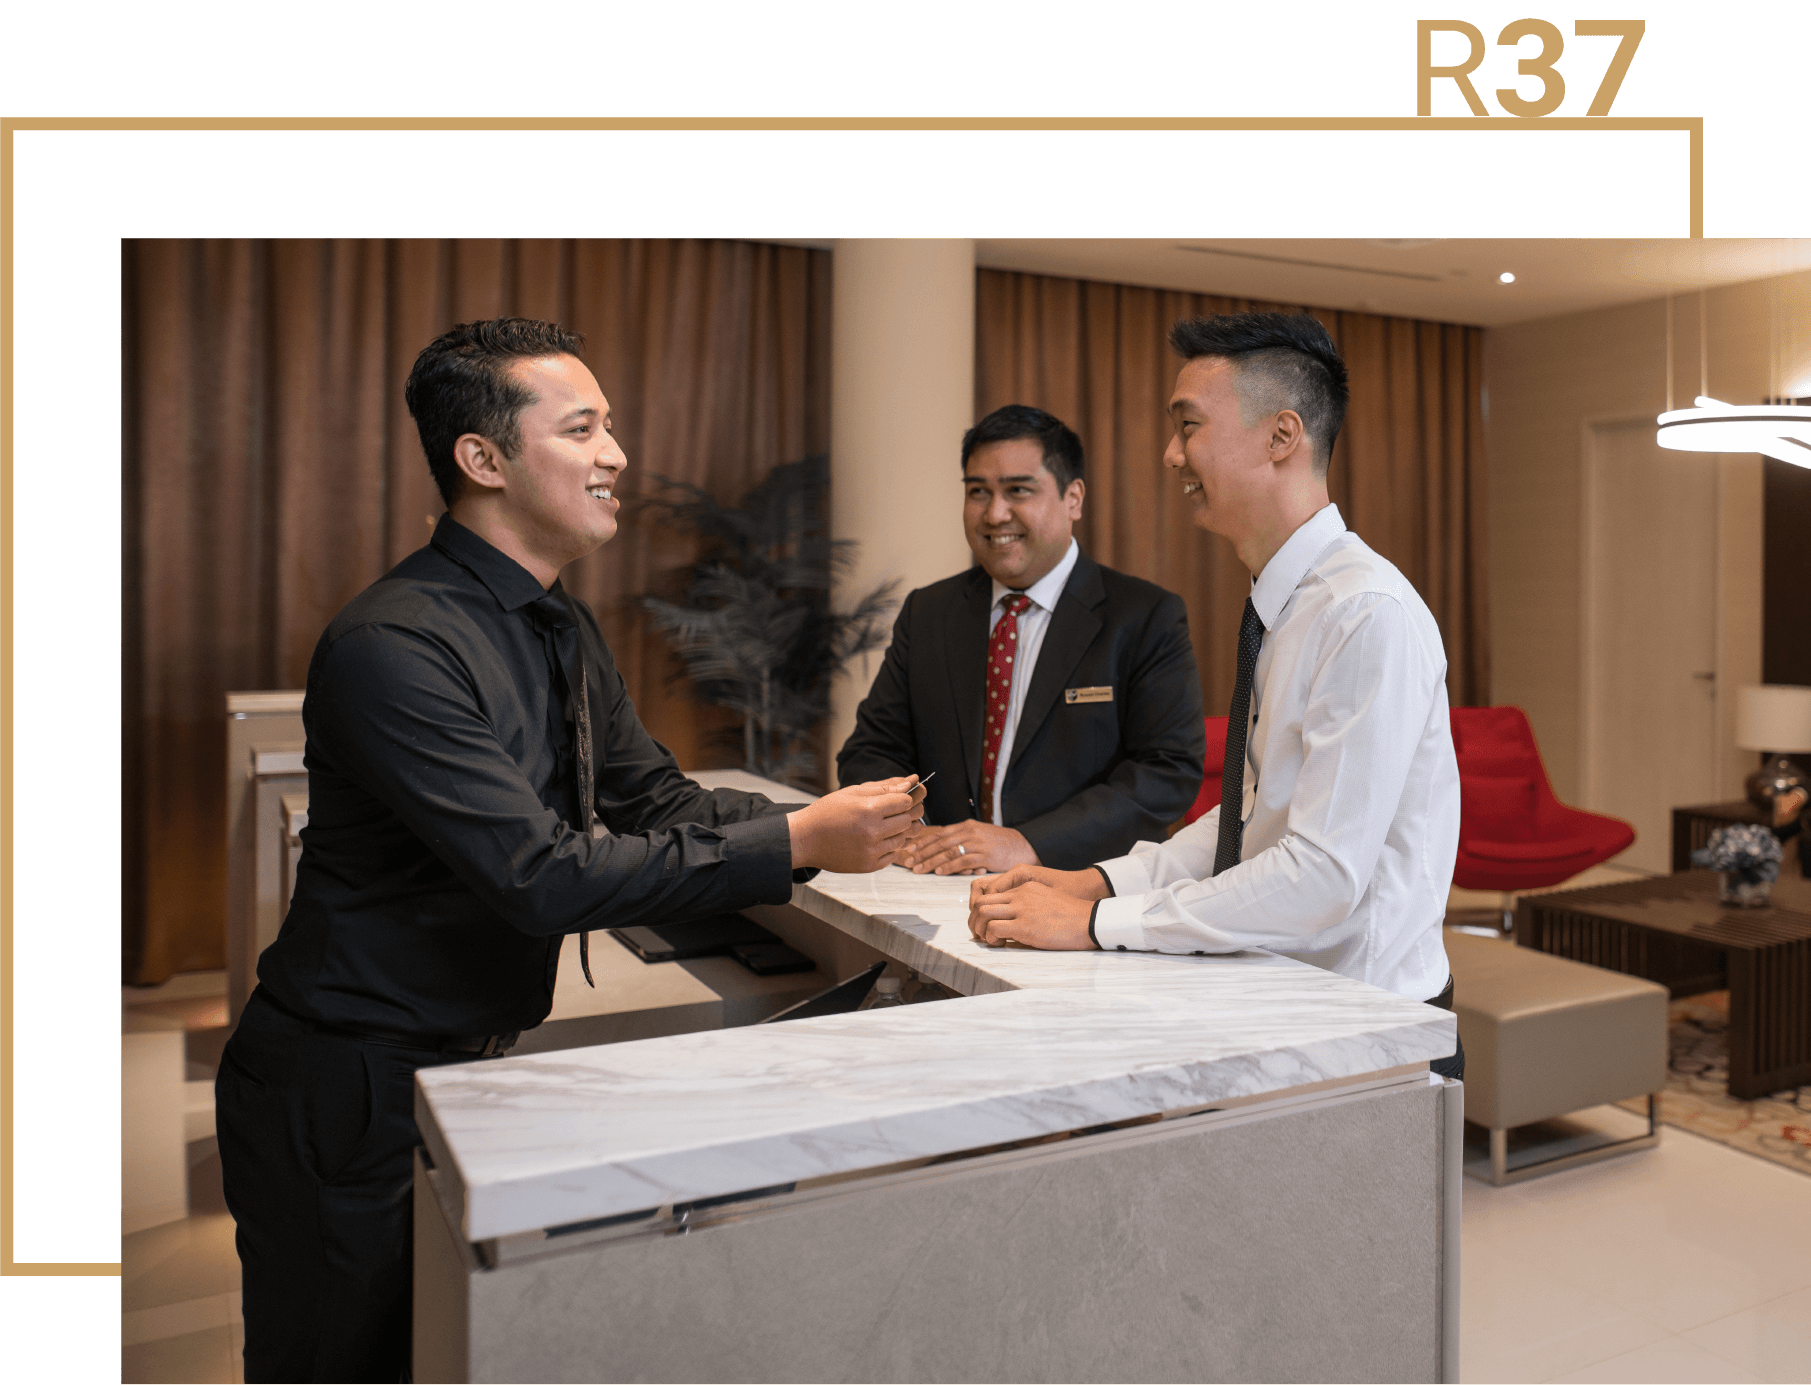 Hotel and Hospitality Management